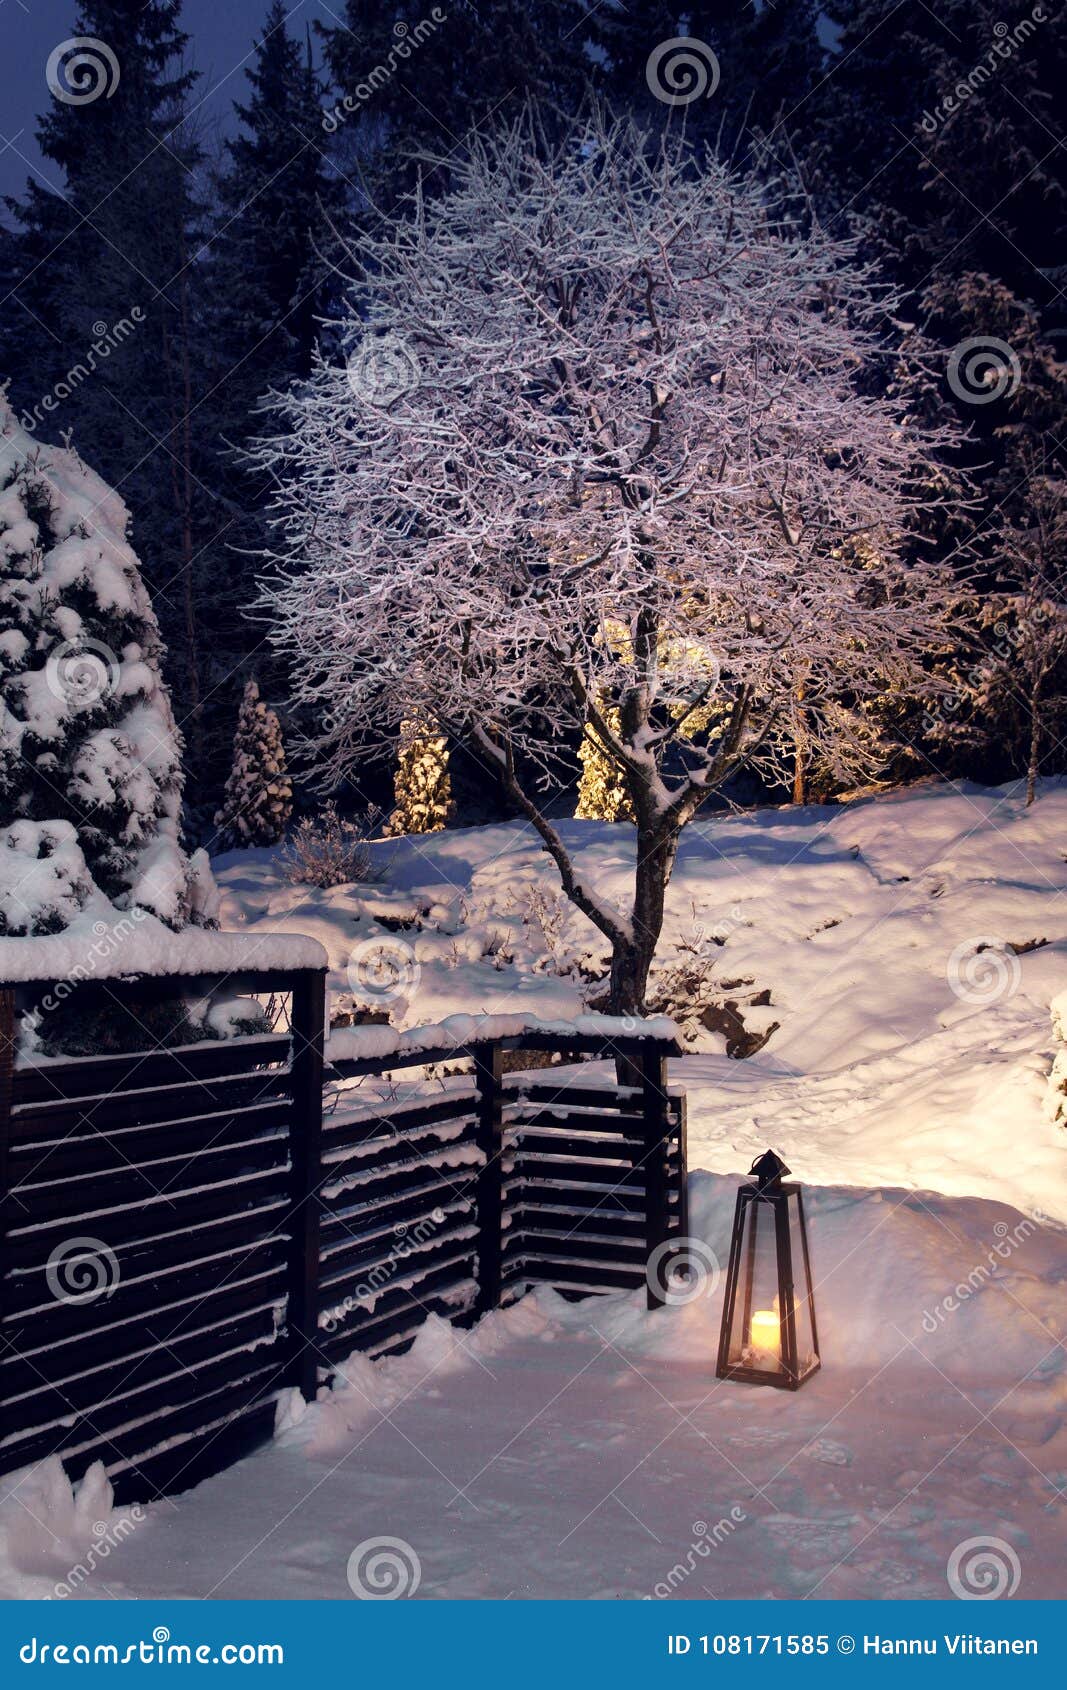 Winter Evening In Snowy Garden Stock Image Image Of Outdoor Tree